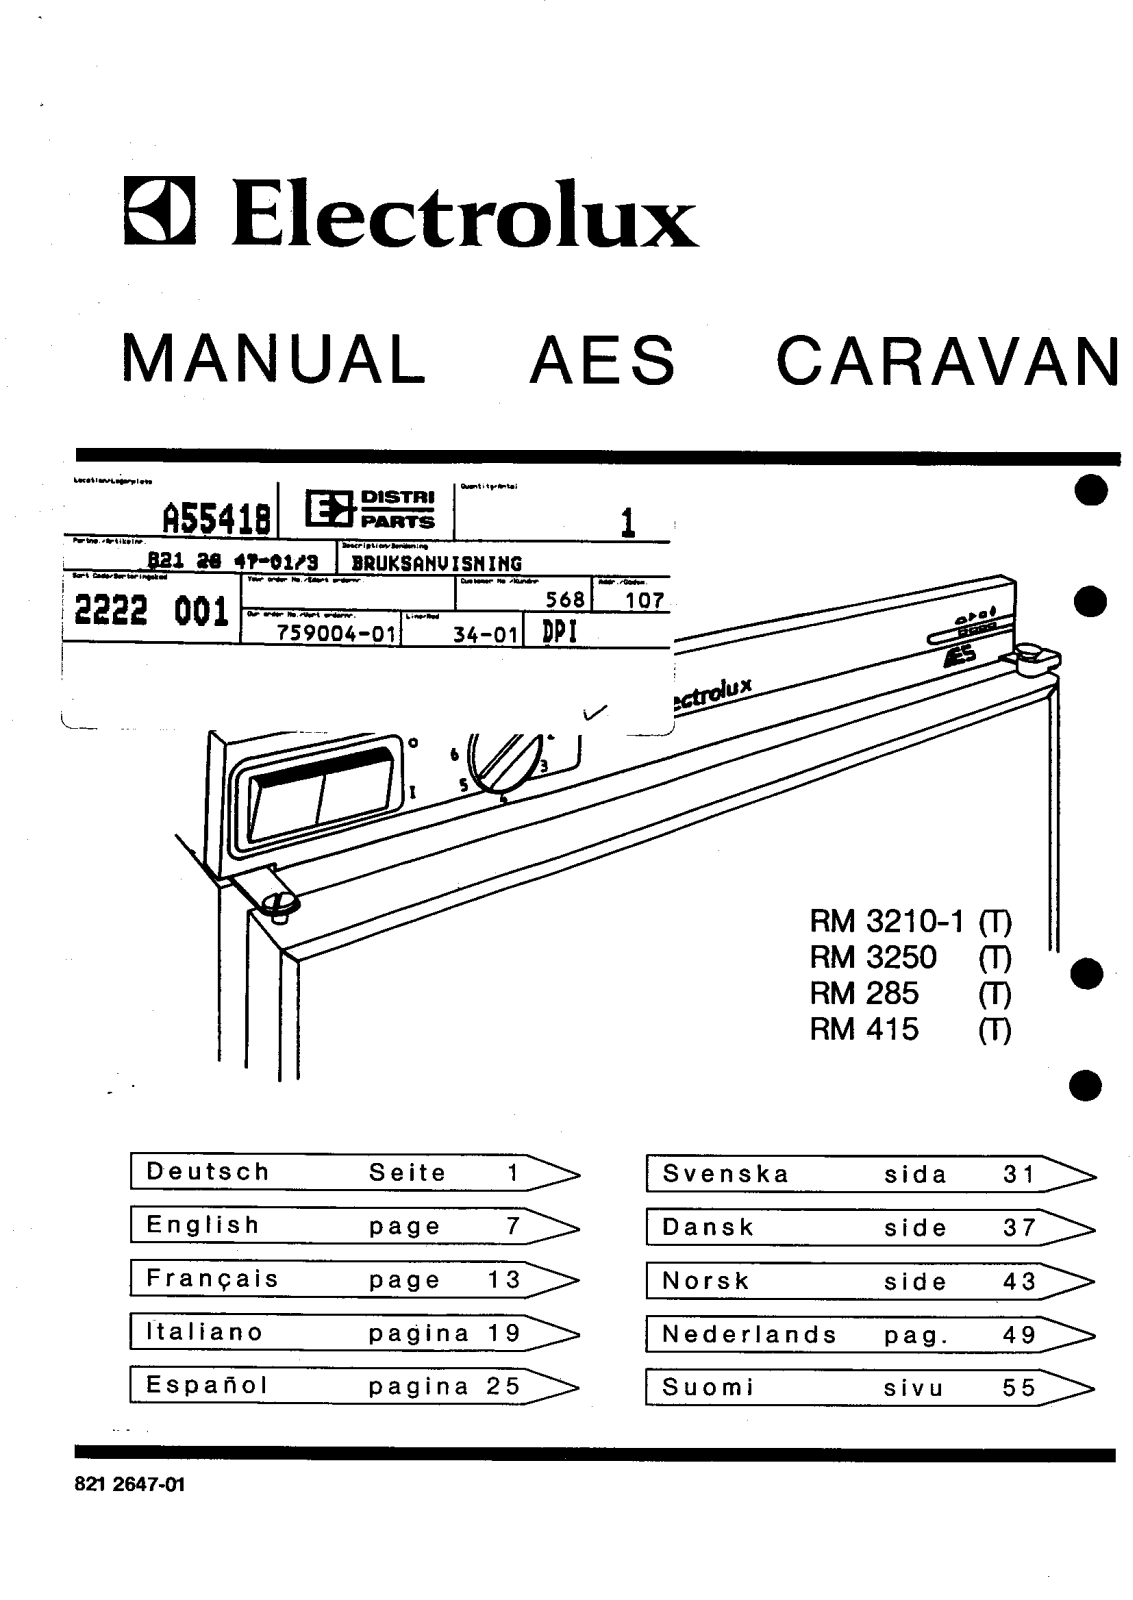 electrolux RM3250, RM415, RM285, RM3210-1 User Manual